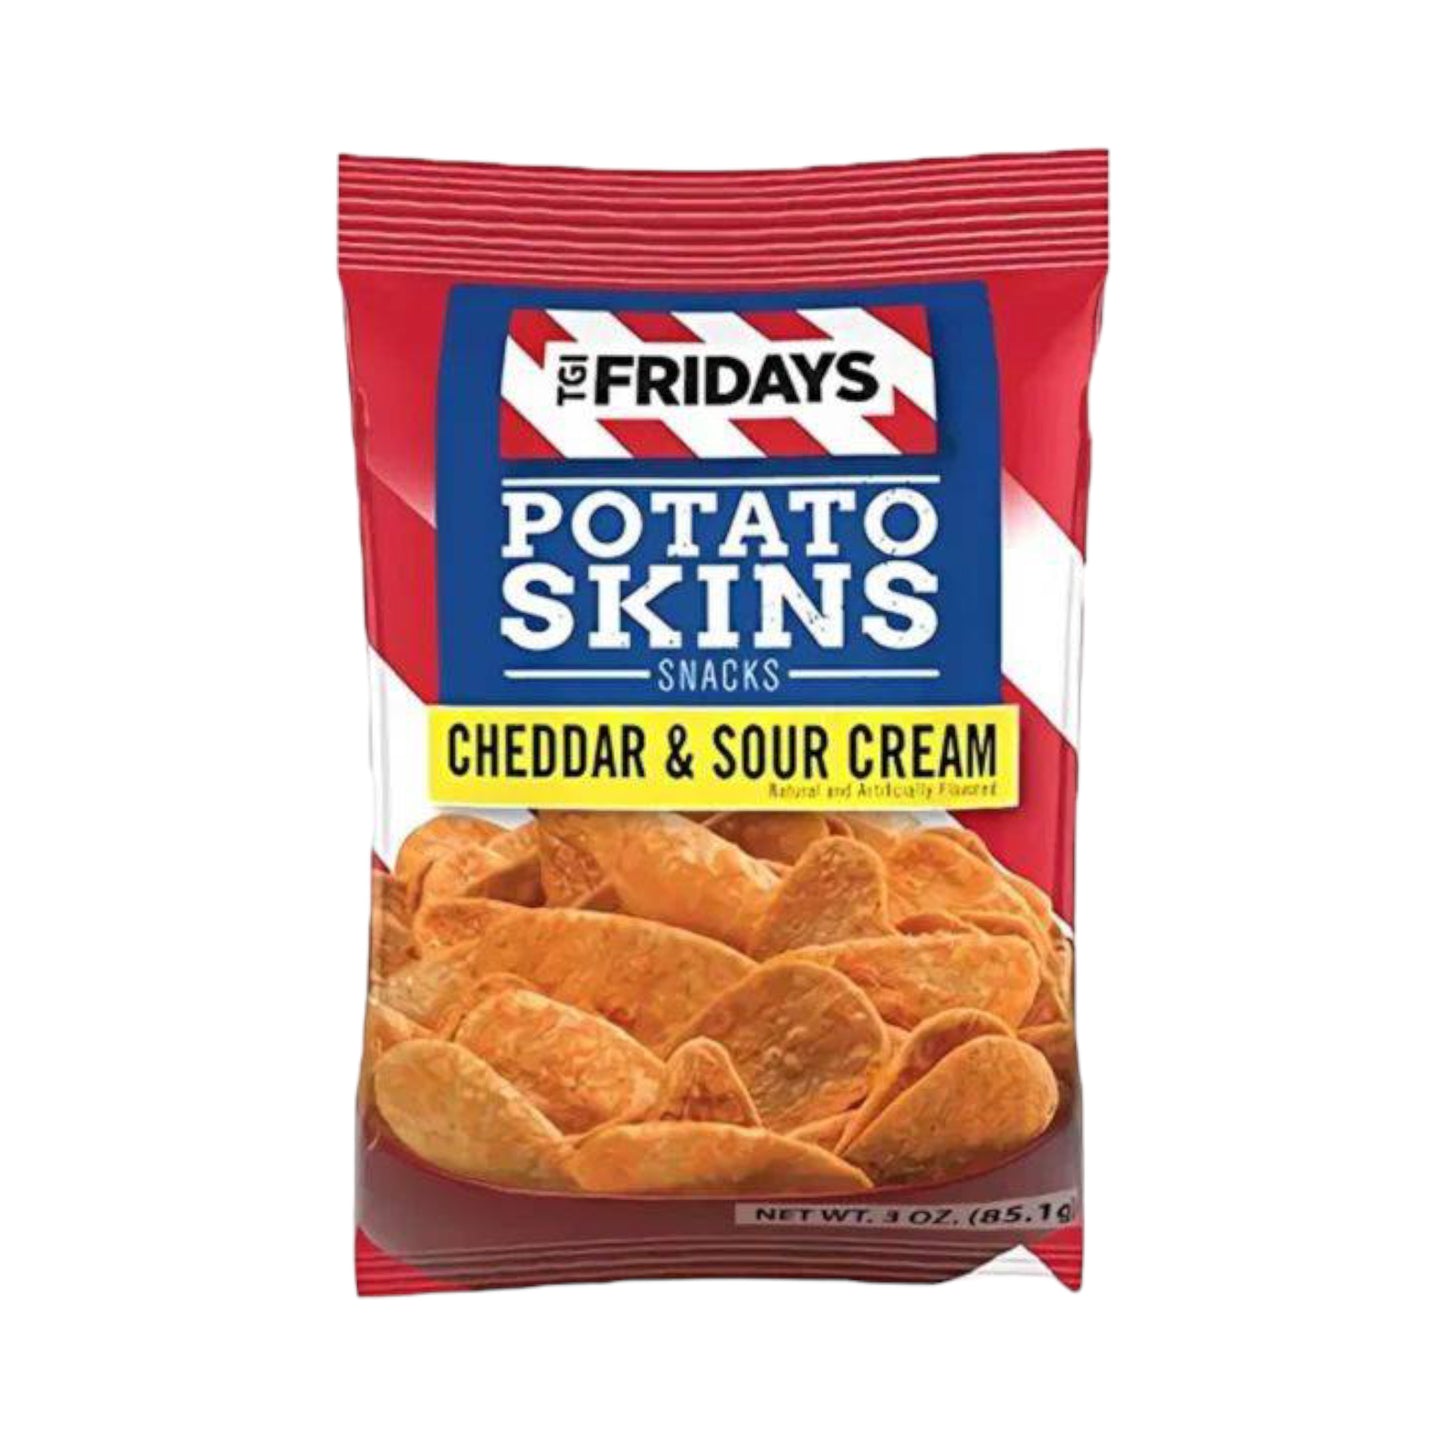 TGI Fridays Cheddar & Sour Cream Potato Skins - 3oz (85.1g)